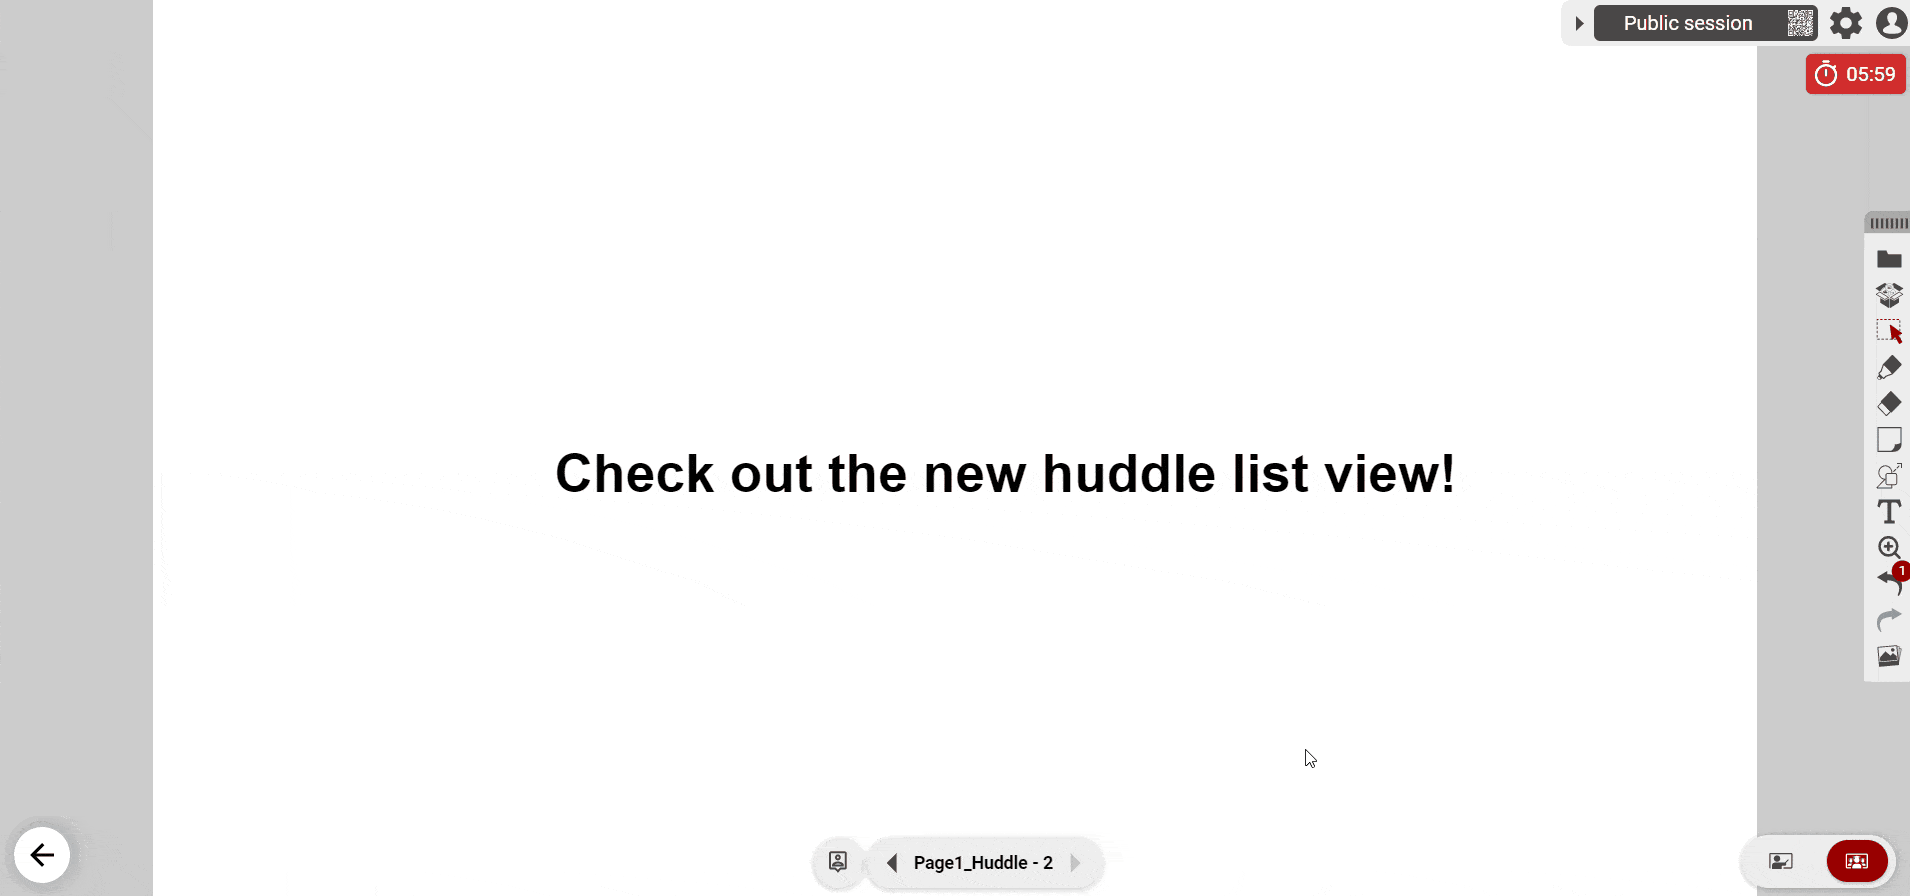 myViewBoard Classroom new huddle list view